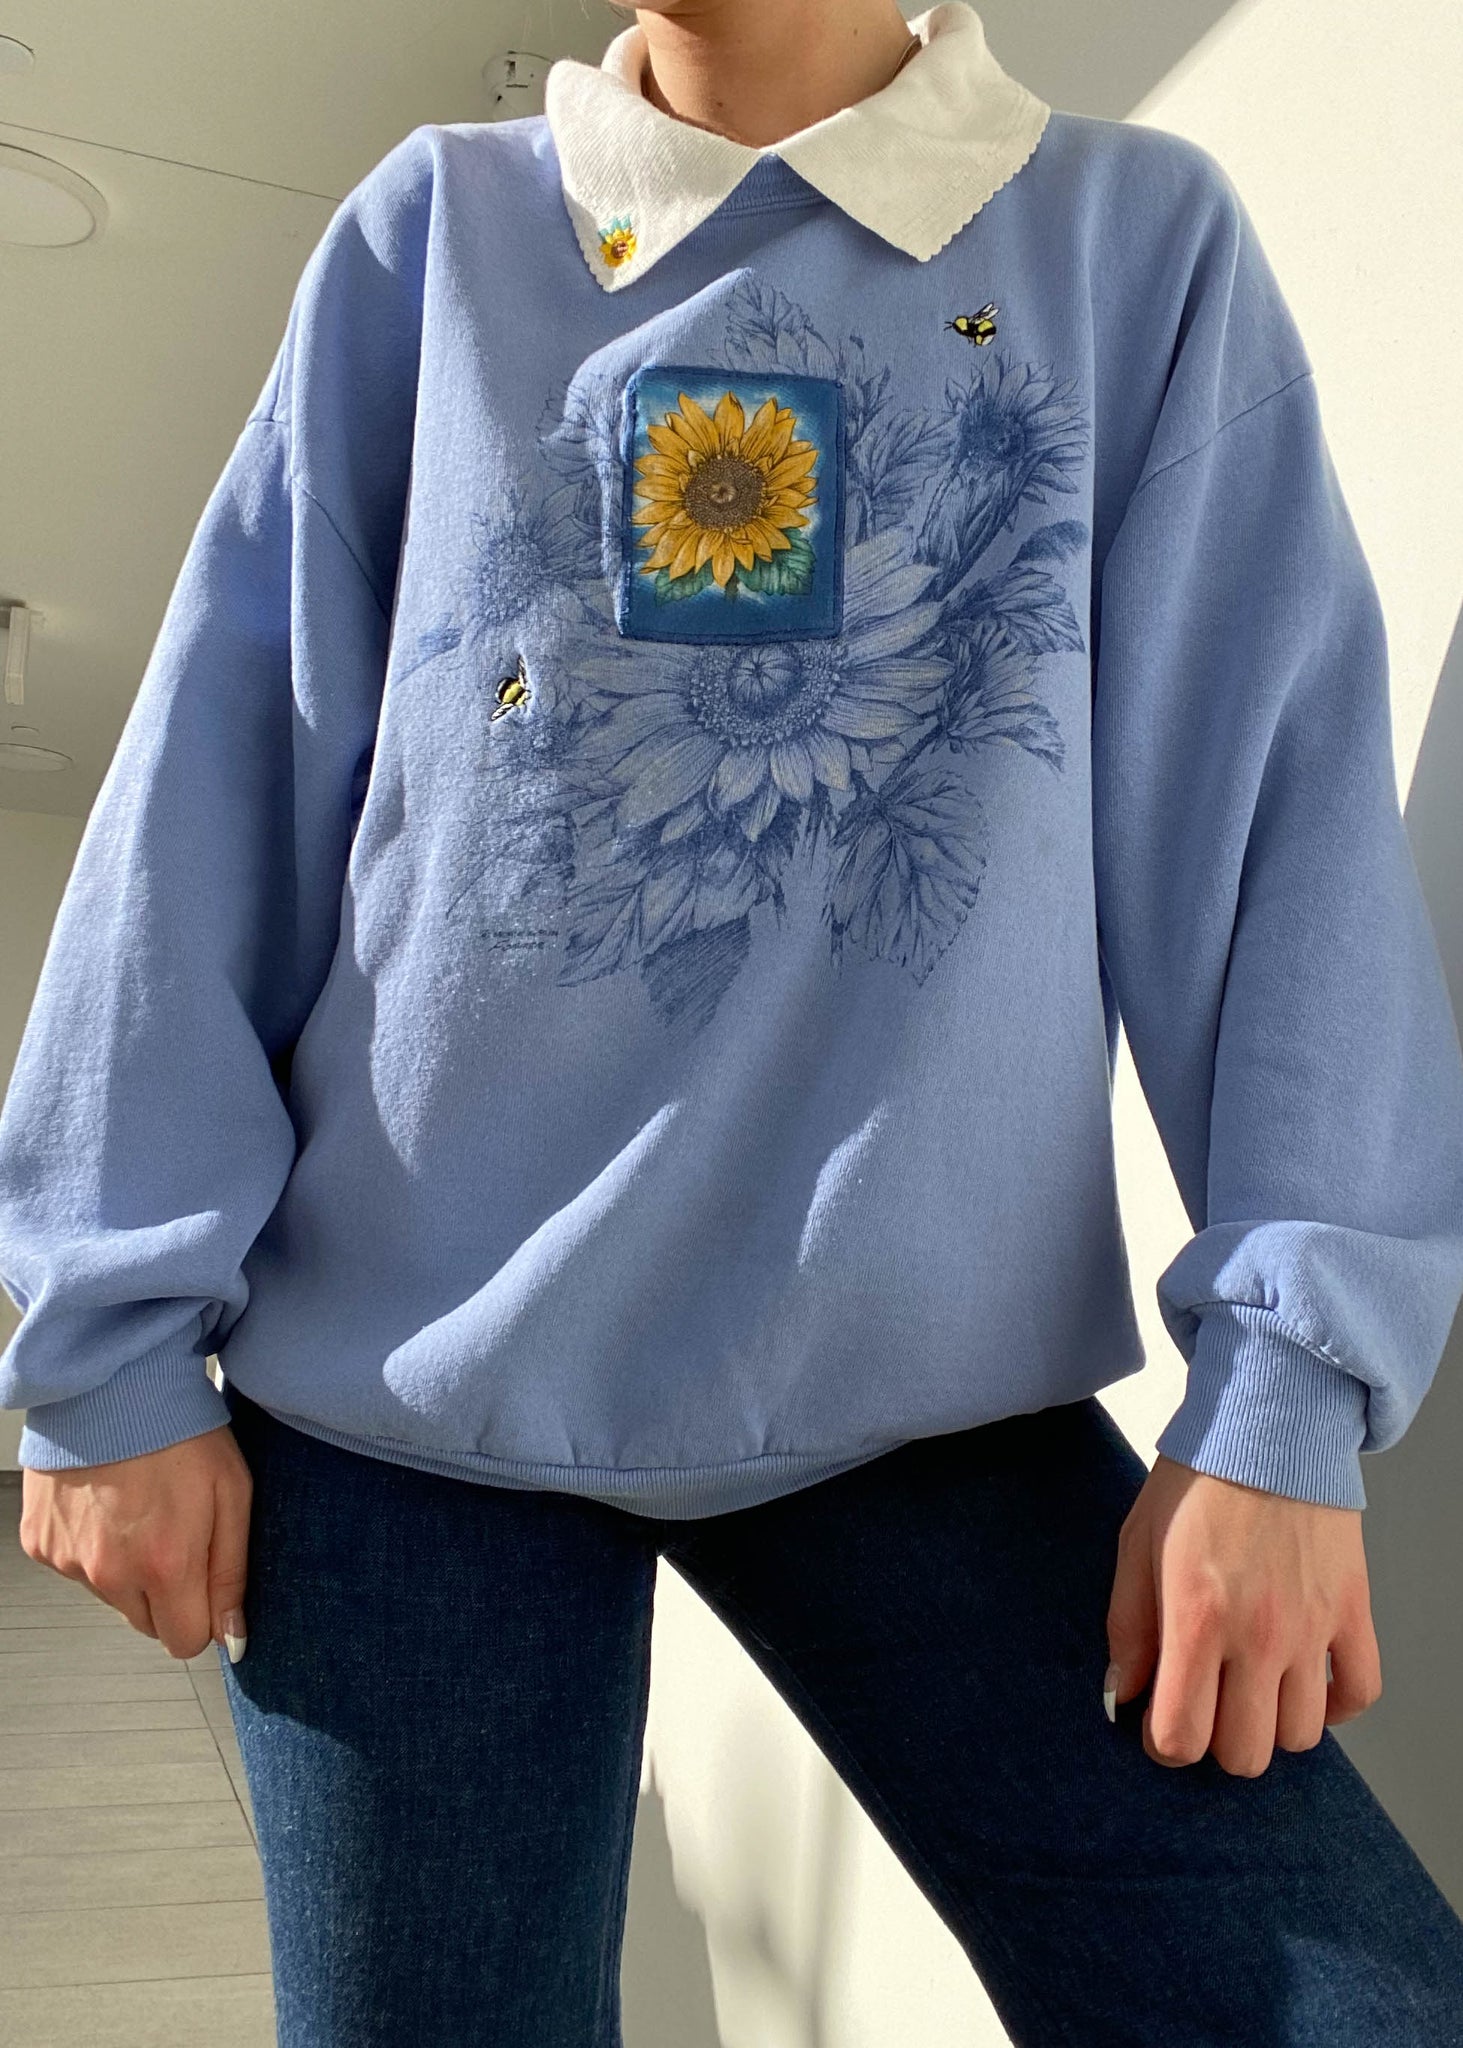 80's Periwinkle Sunflower Collared Sweatshirt (M-L)